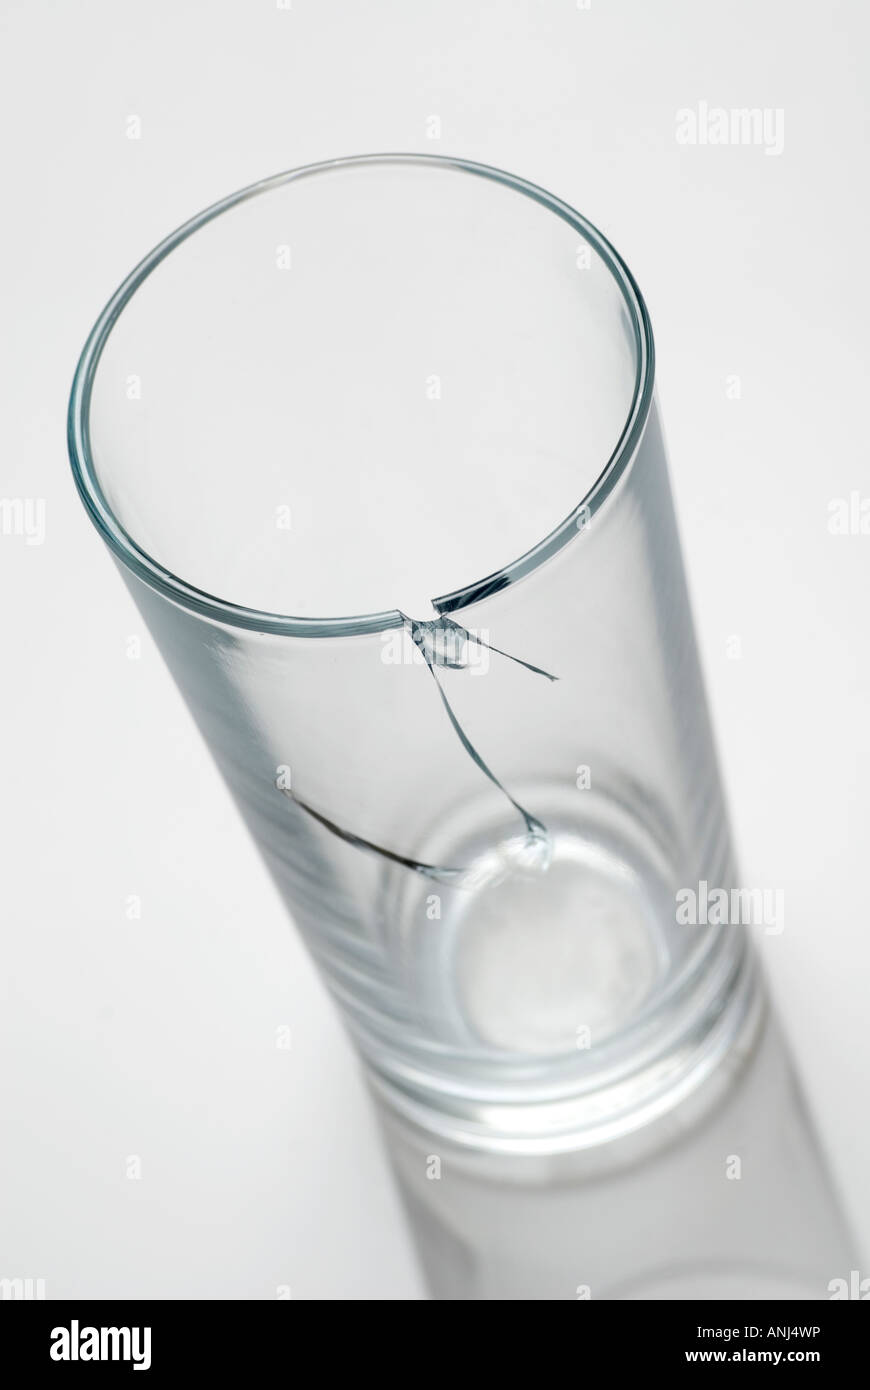 Broken drinking glass Stock Photo